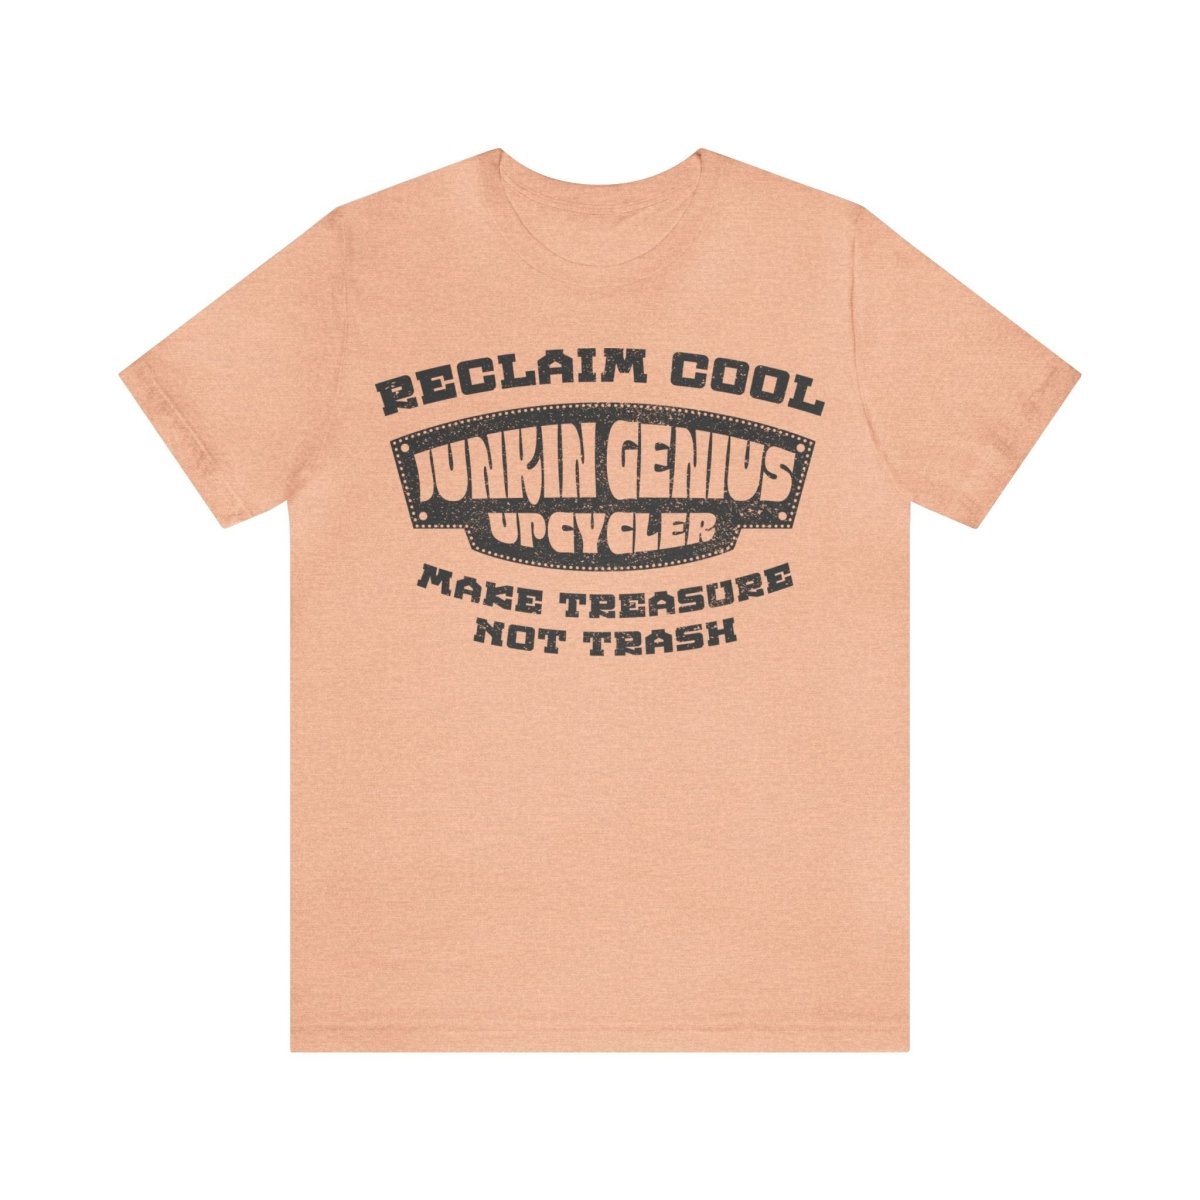 Reclaim Cool - Junkin Genius Upcycler Premium T-Shirt, Make Treasure Not Trash, ReUse, DIY, Recycle, Self Reliance, Fix It